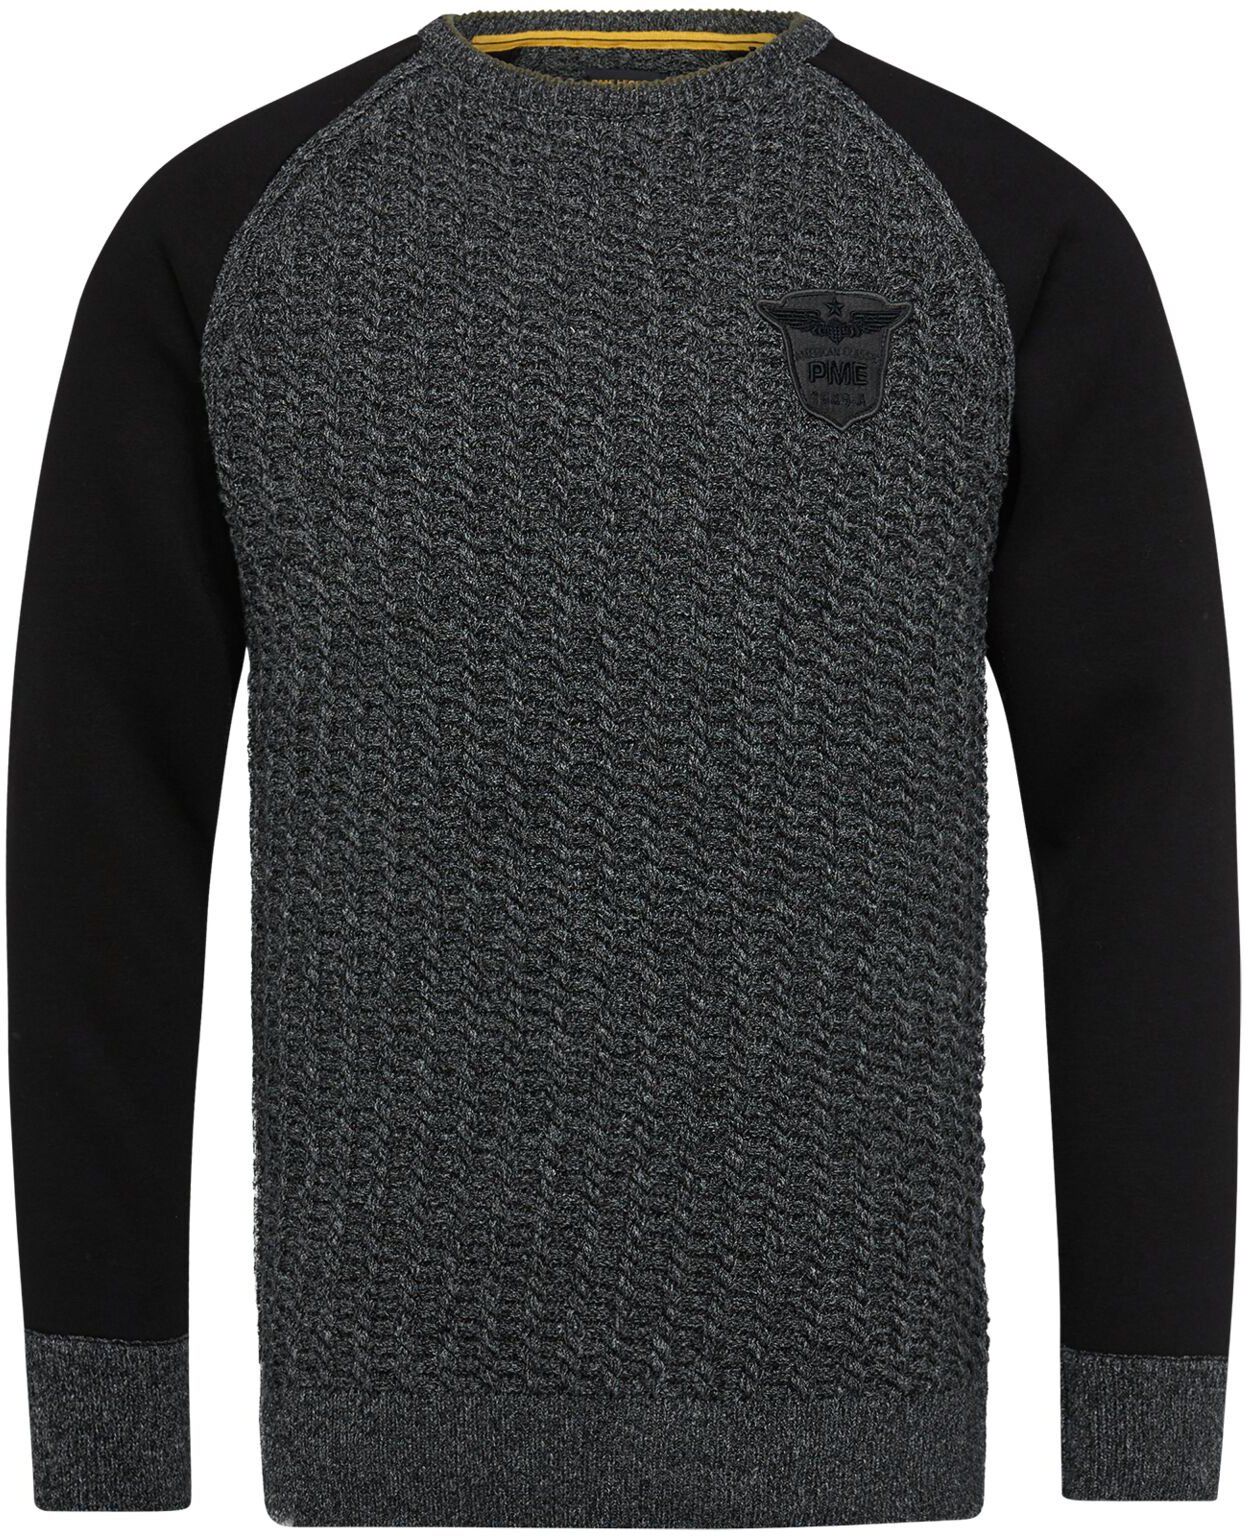 PME Legend Sweater Black size 3XL